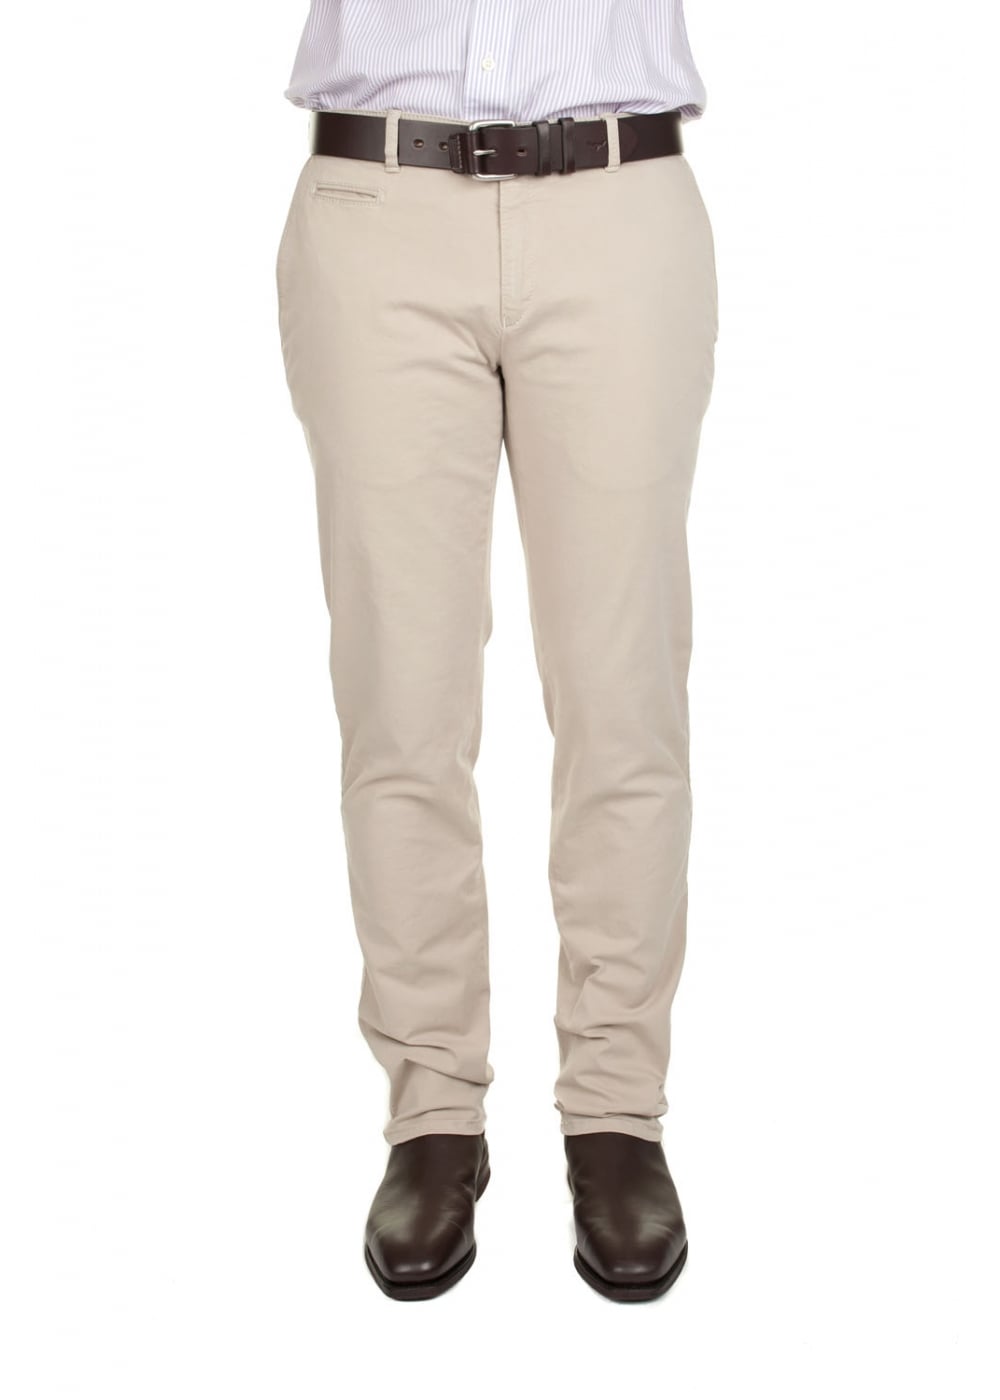 BRAX CHINO FOR MEN – Elegant casual pants for men’s wardrobe